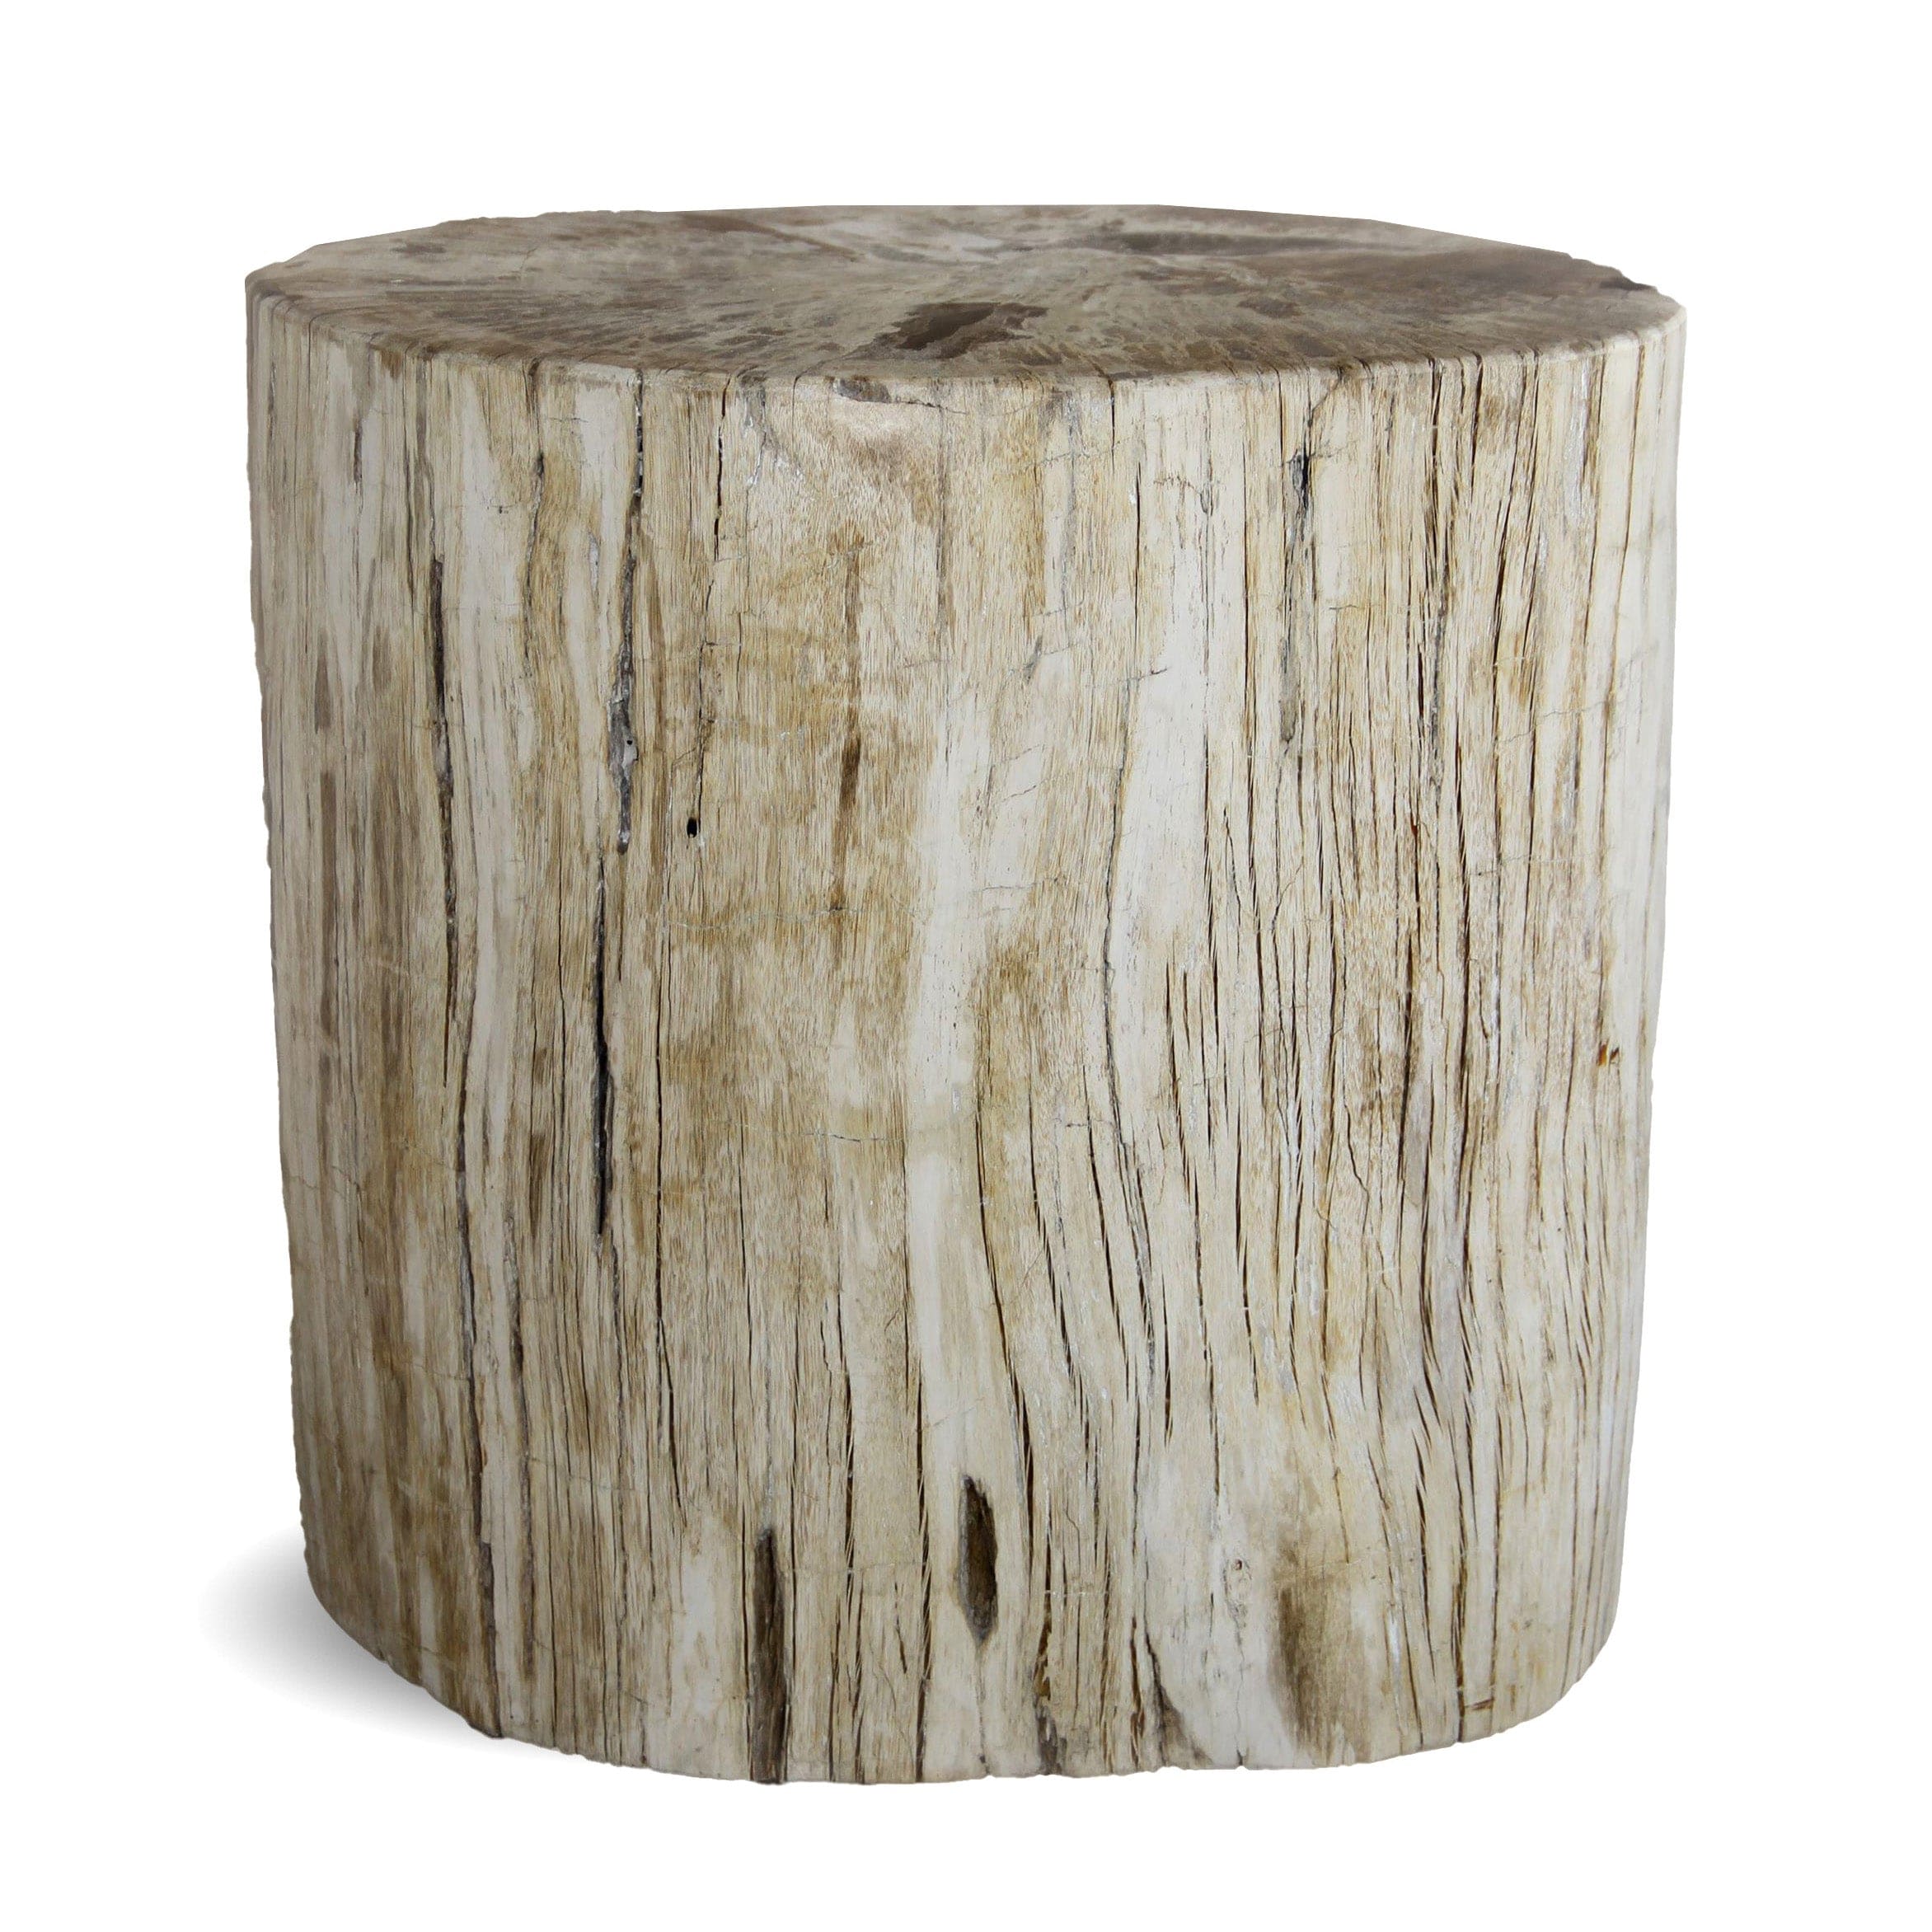 Kalifano Petrified Wood Petrified Wood Round Stump / Stool from Indonesia - 16" / 181 lbs PWS3300.003